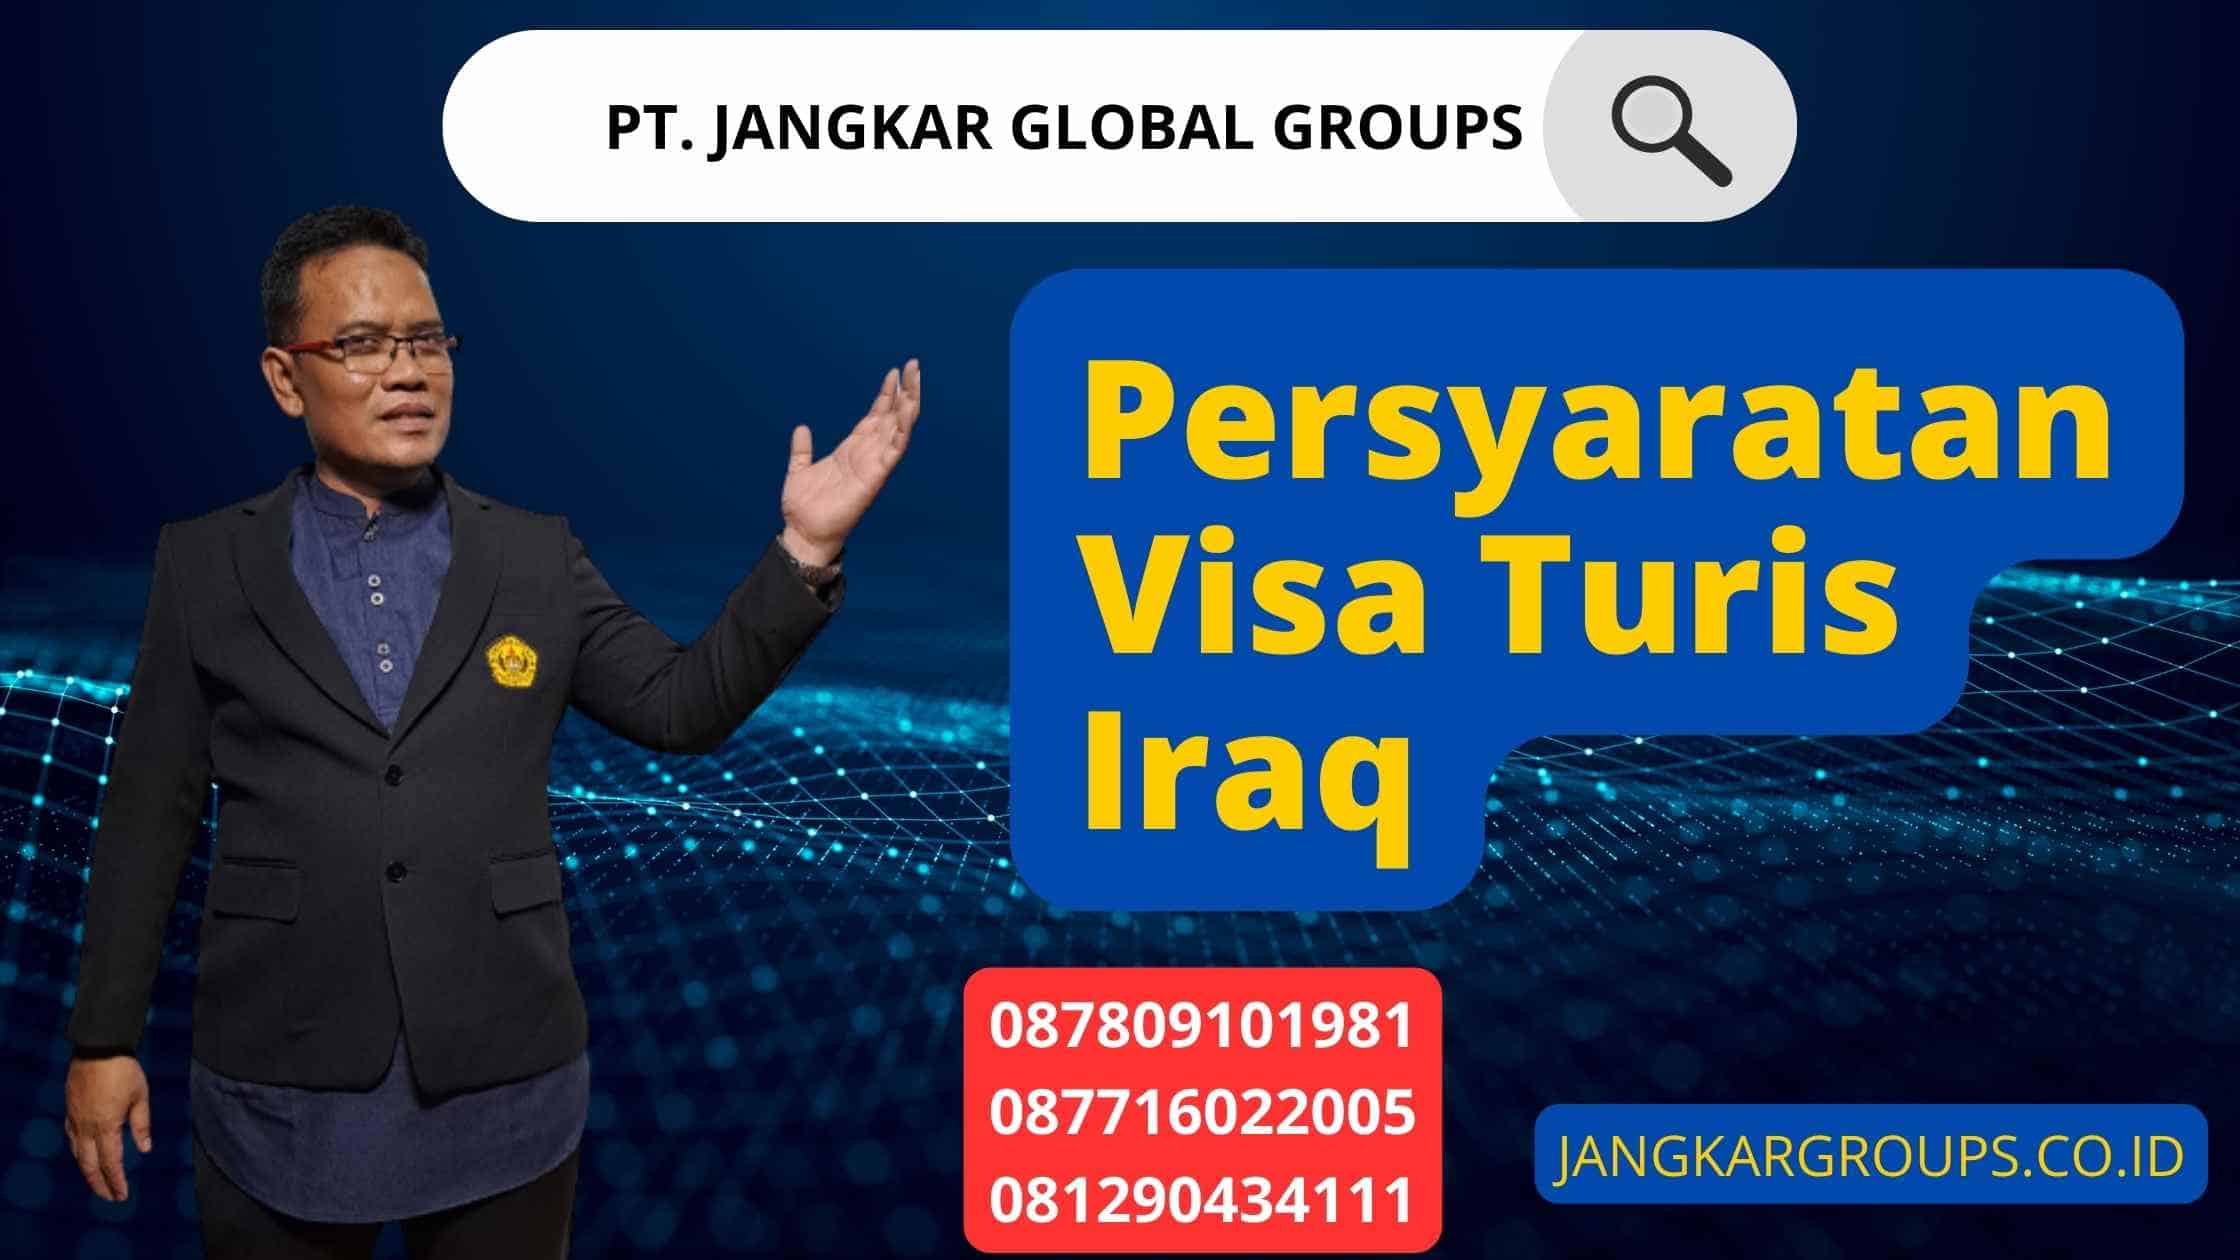 Persyaratan Visa Turis Iraq